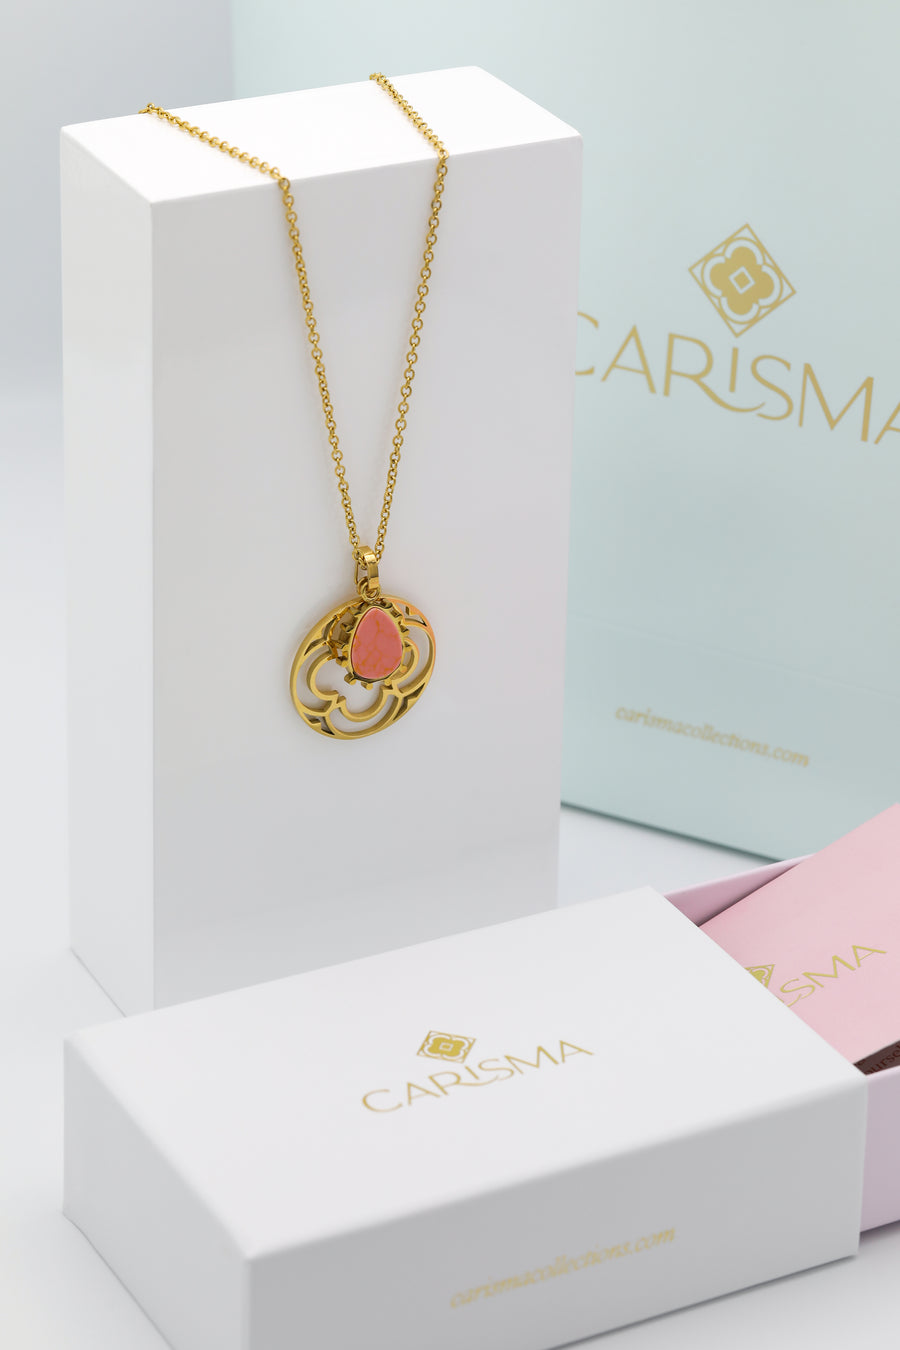 Prickly Pear Orange Stone Pendant & Large Carisma Logo Hollow Pendant Necklace Gift Set